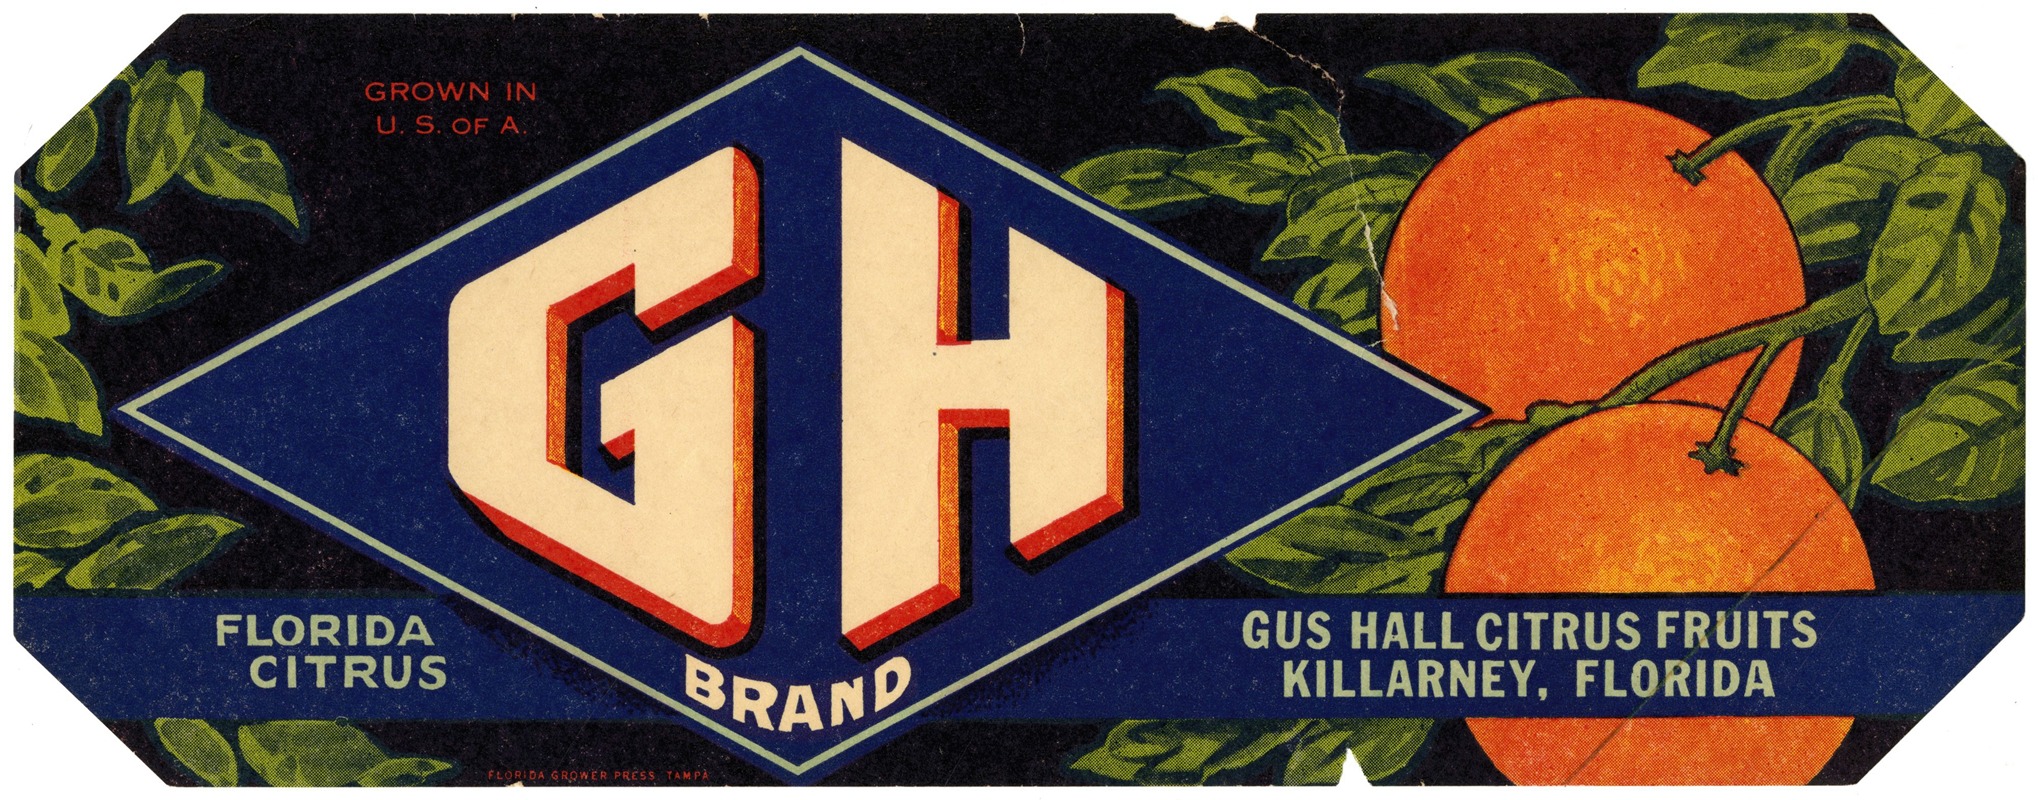 Anonymous - GH Brand Florida Citrus Label